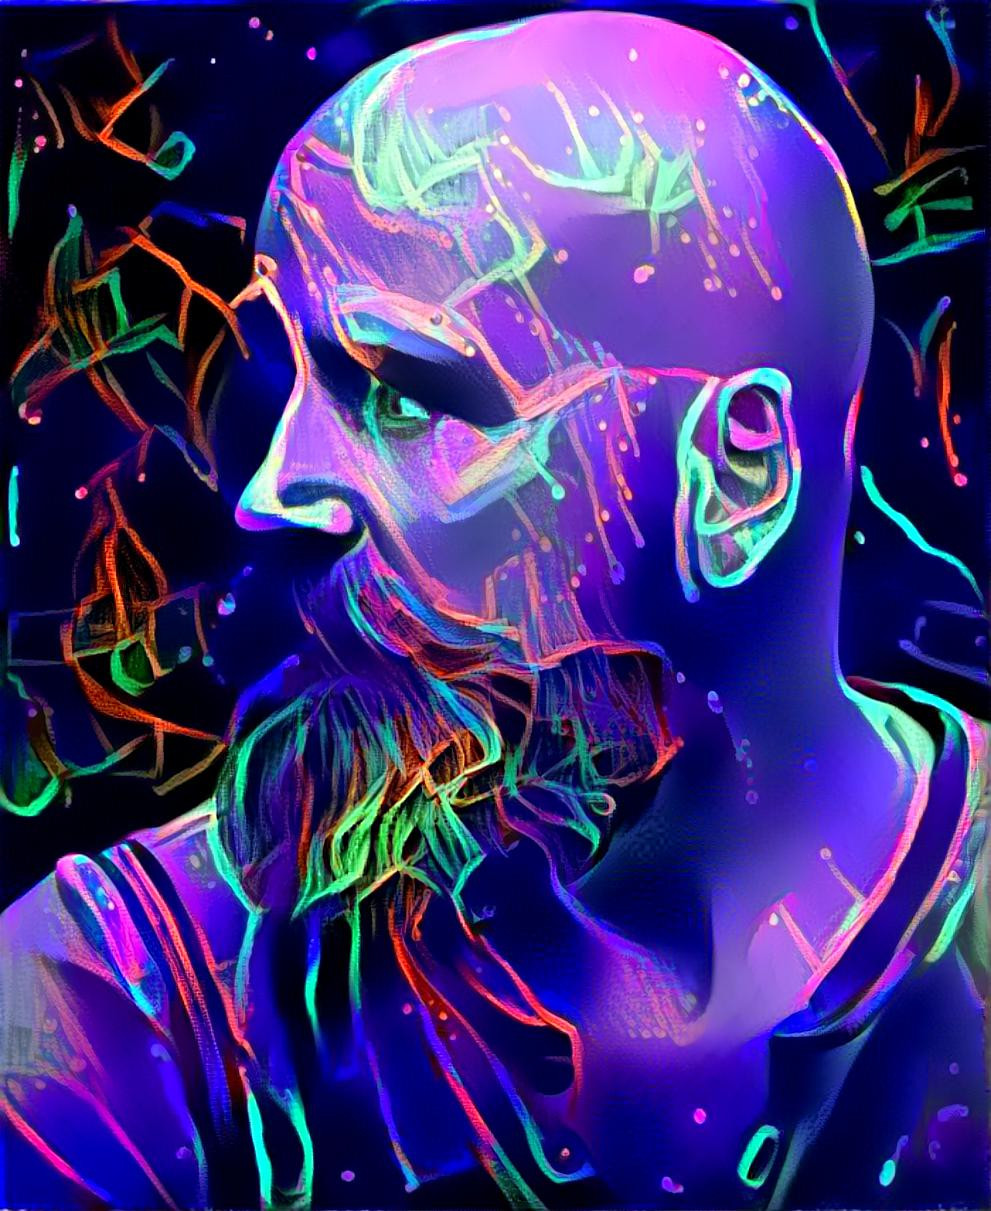 Bearded bald man @ neon